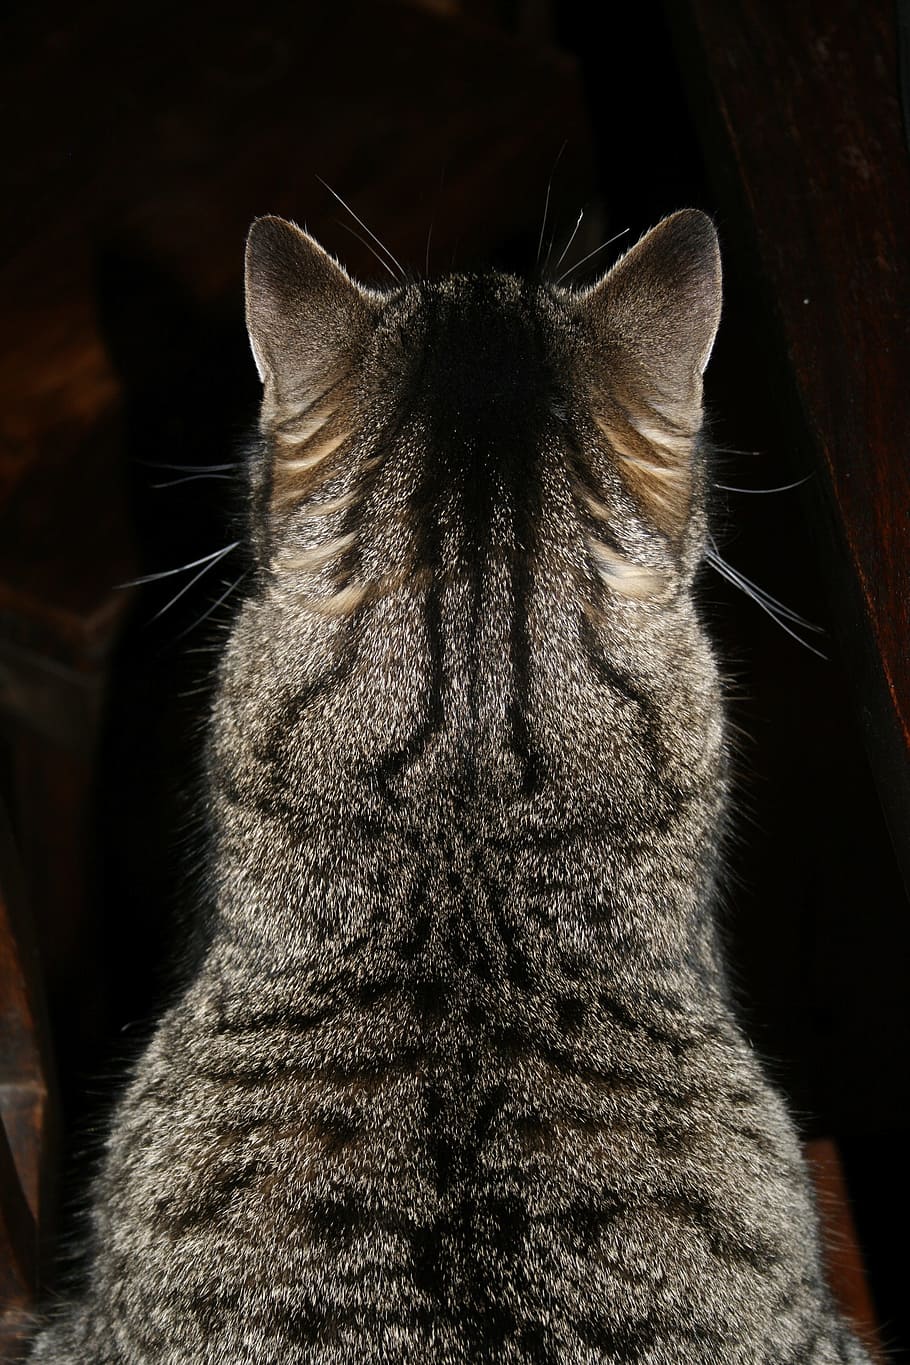 silver tabby cat, cat, pet, domestic cat, move, back, cat ears, cat fur, one animal, animal